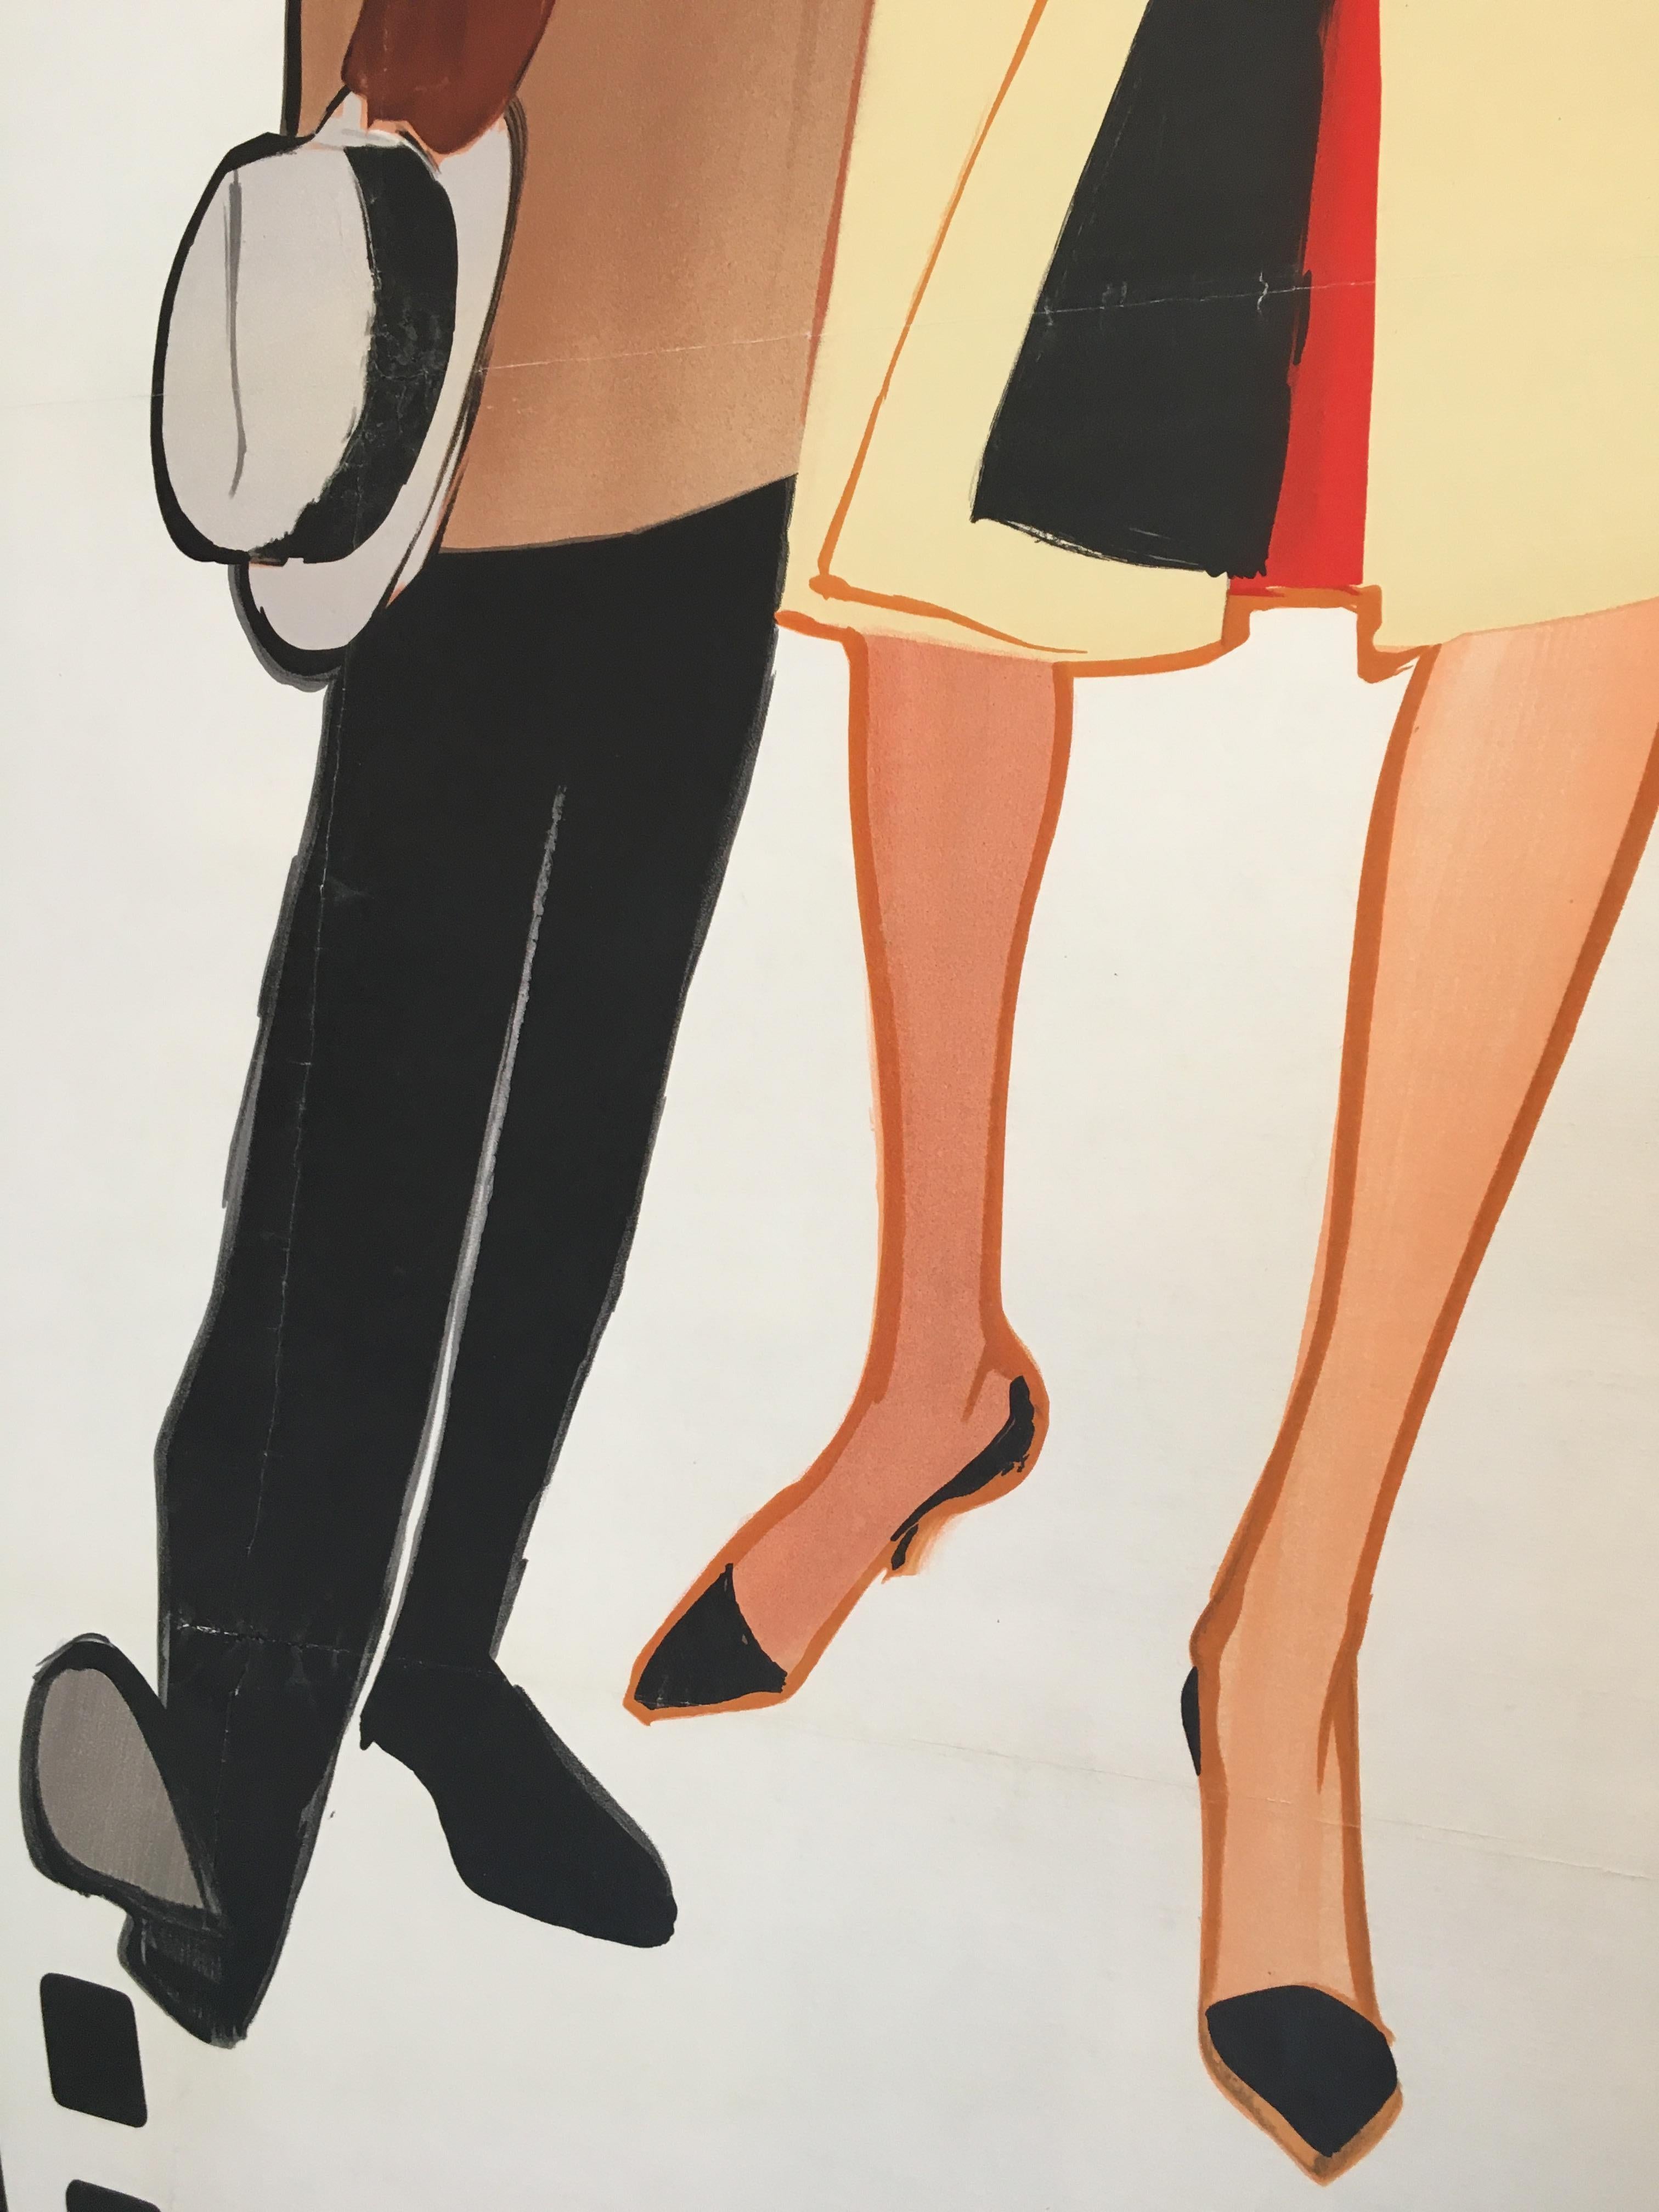 Original Vintage French Fashion Advertisement Poster 'Blizzand Couple' by Gruau 3